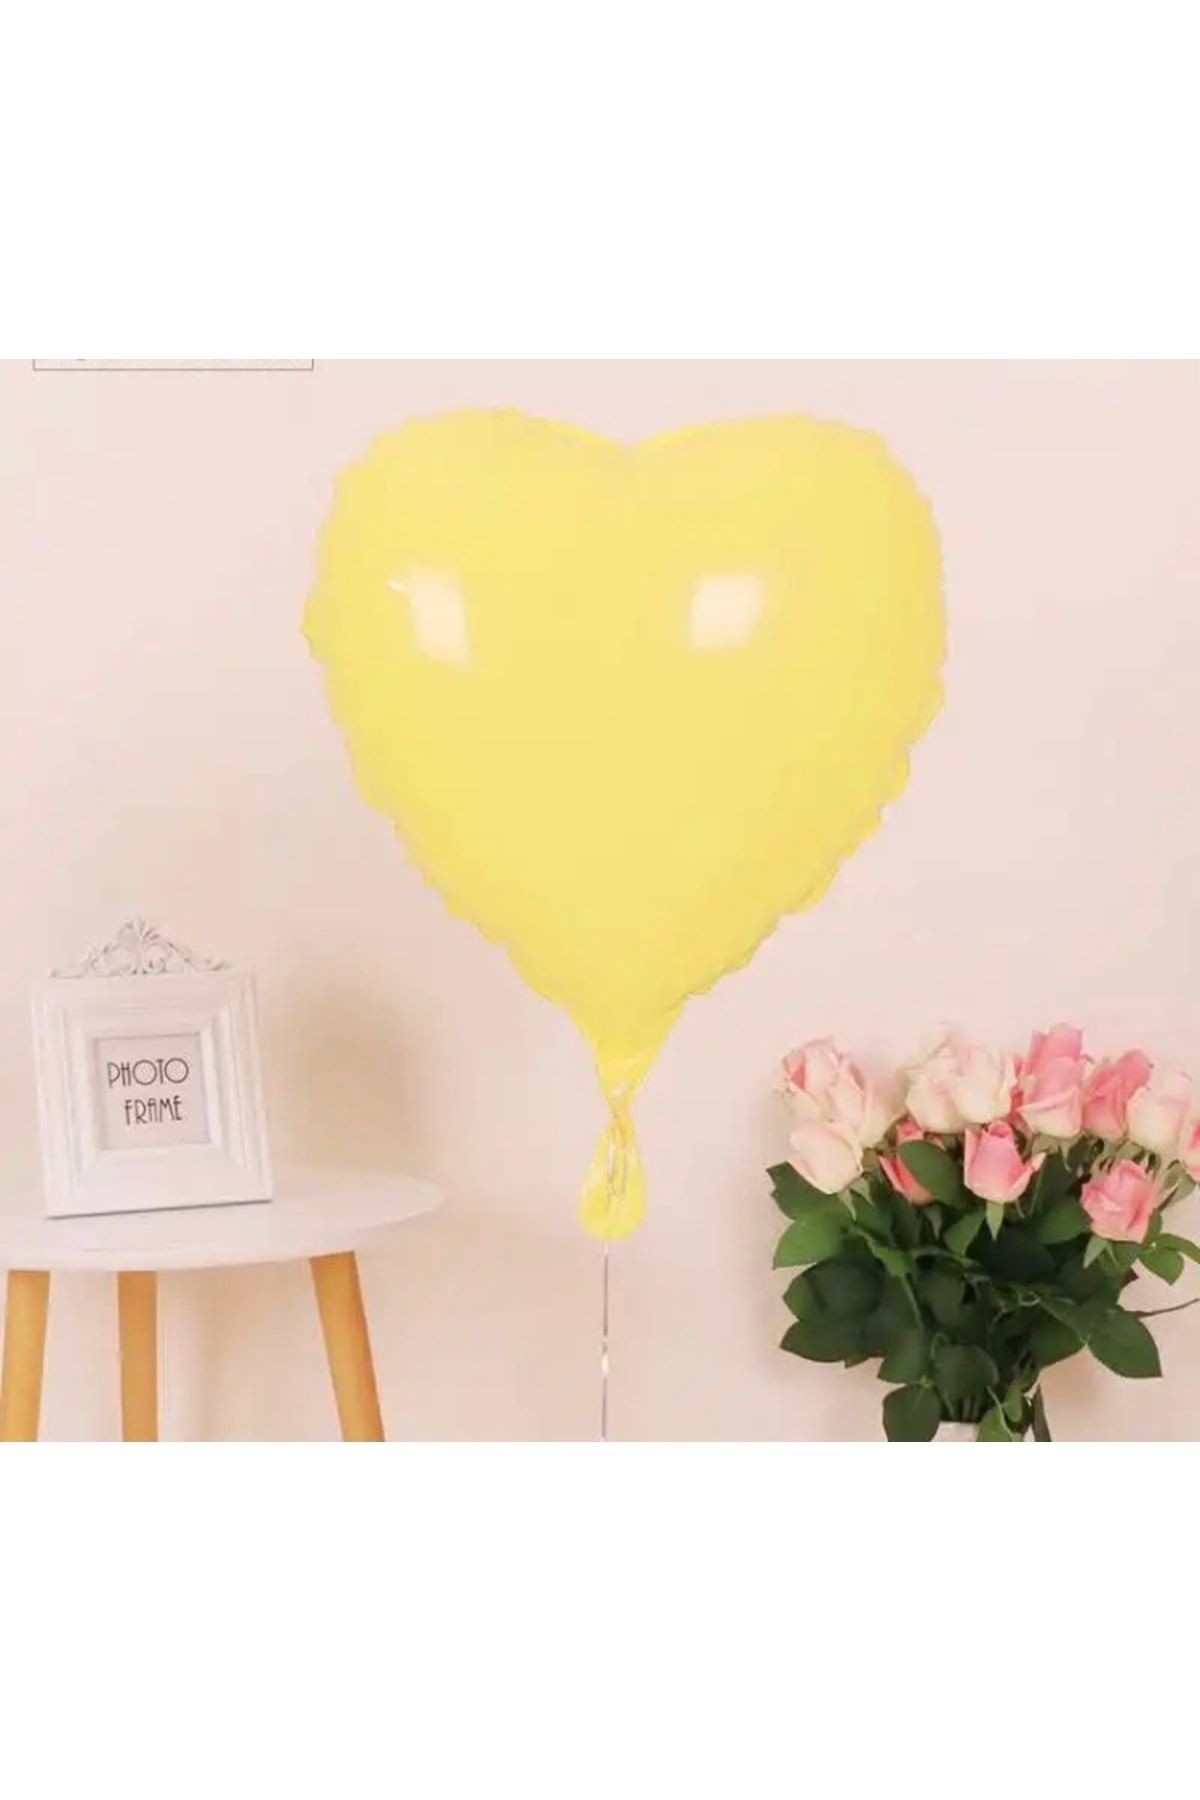 Deniz Party Store Makaron Sarı Kalp Folyo Balon 18 Inç 45 Cm 1 Adet